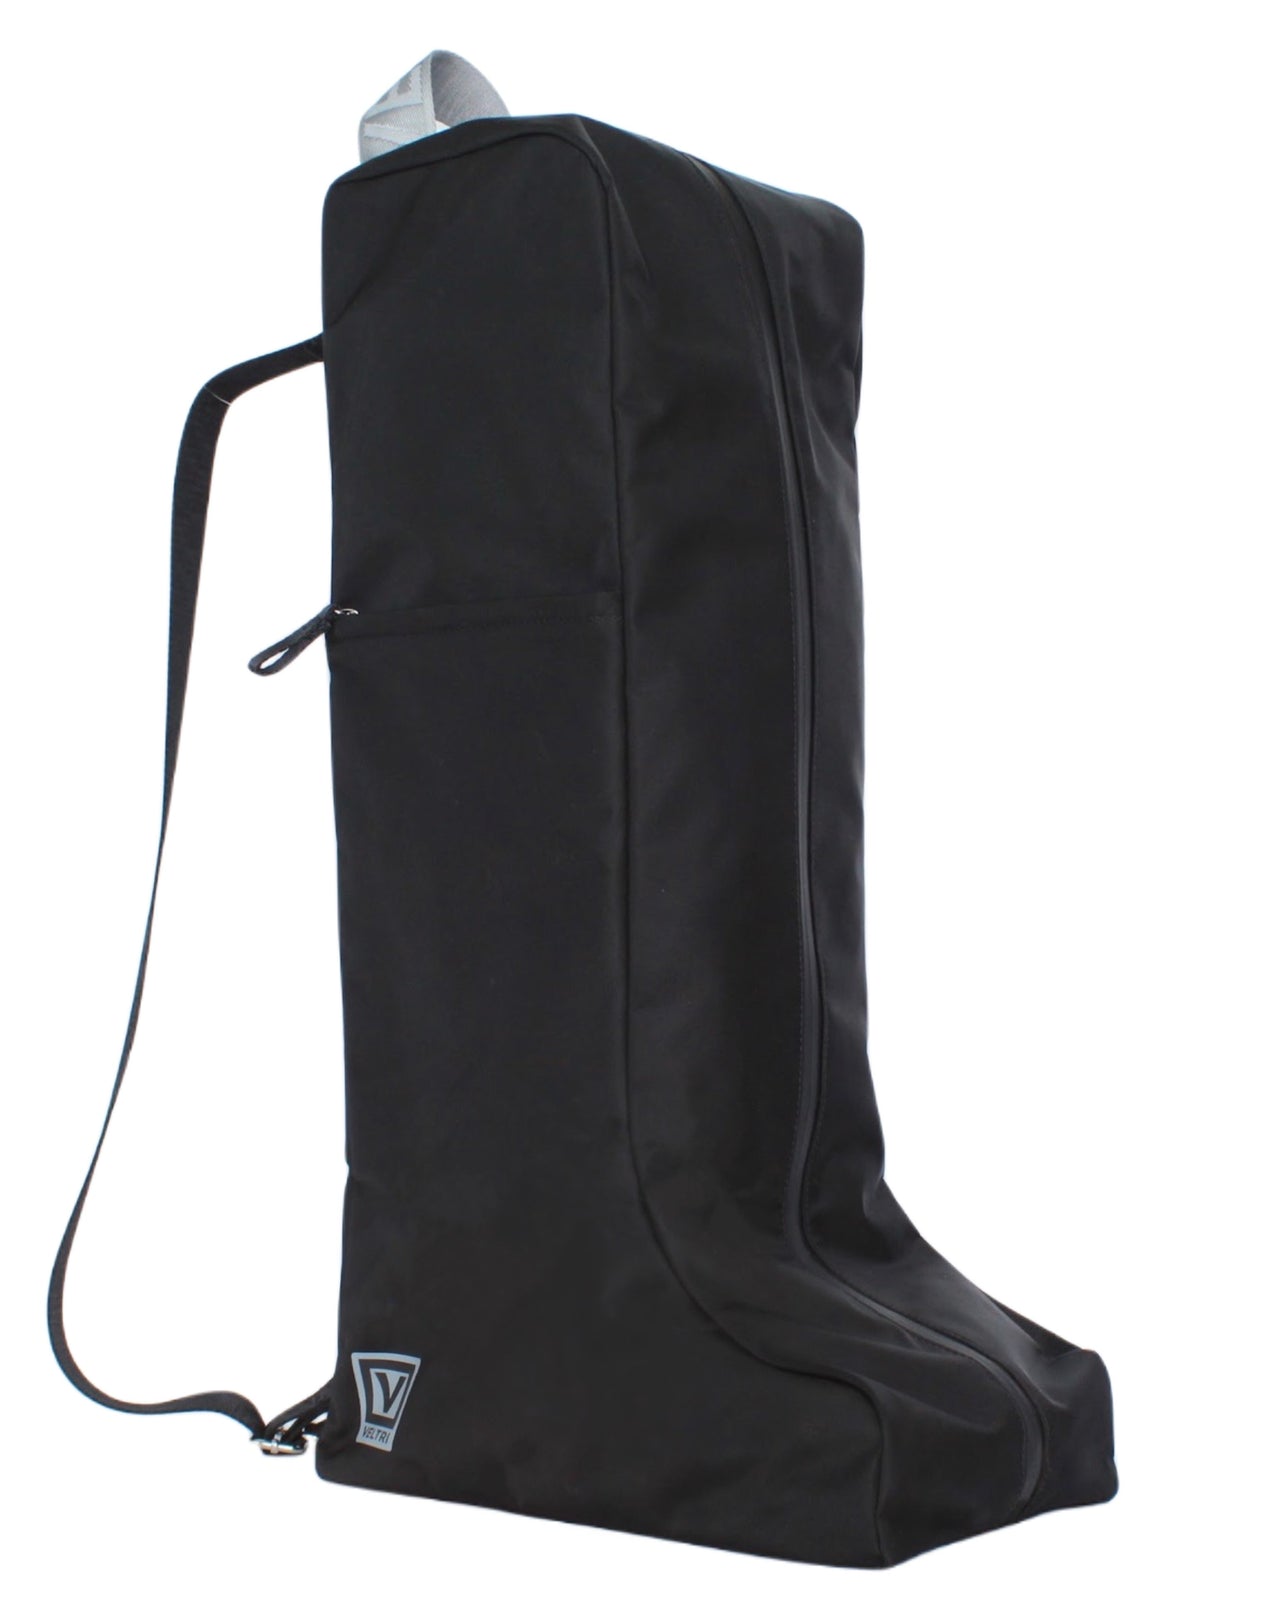 Veltri Sport - Bedford Boot Bag